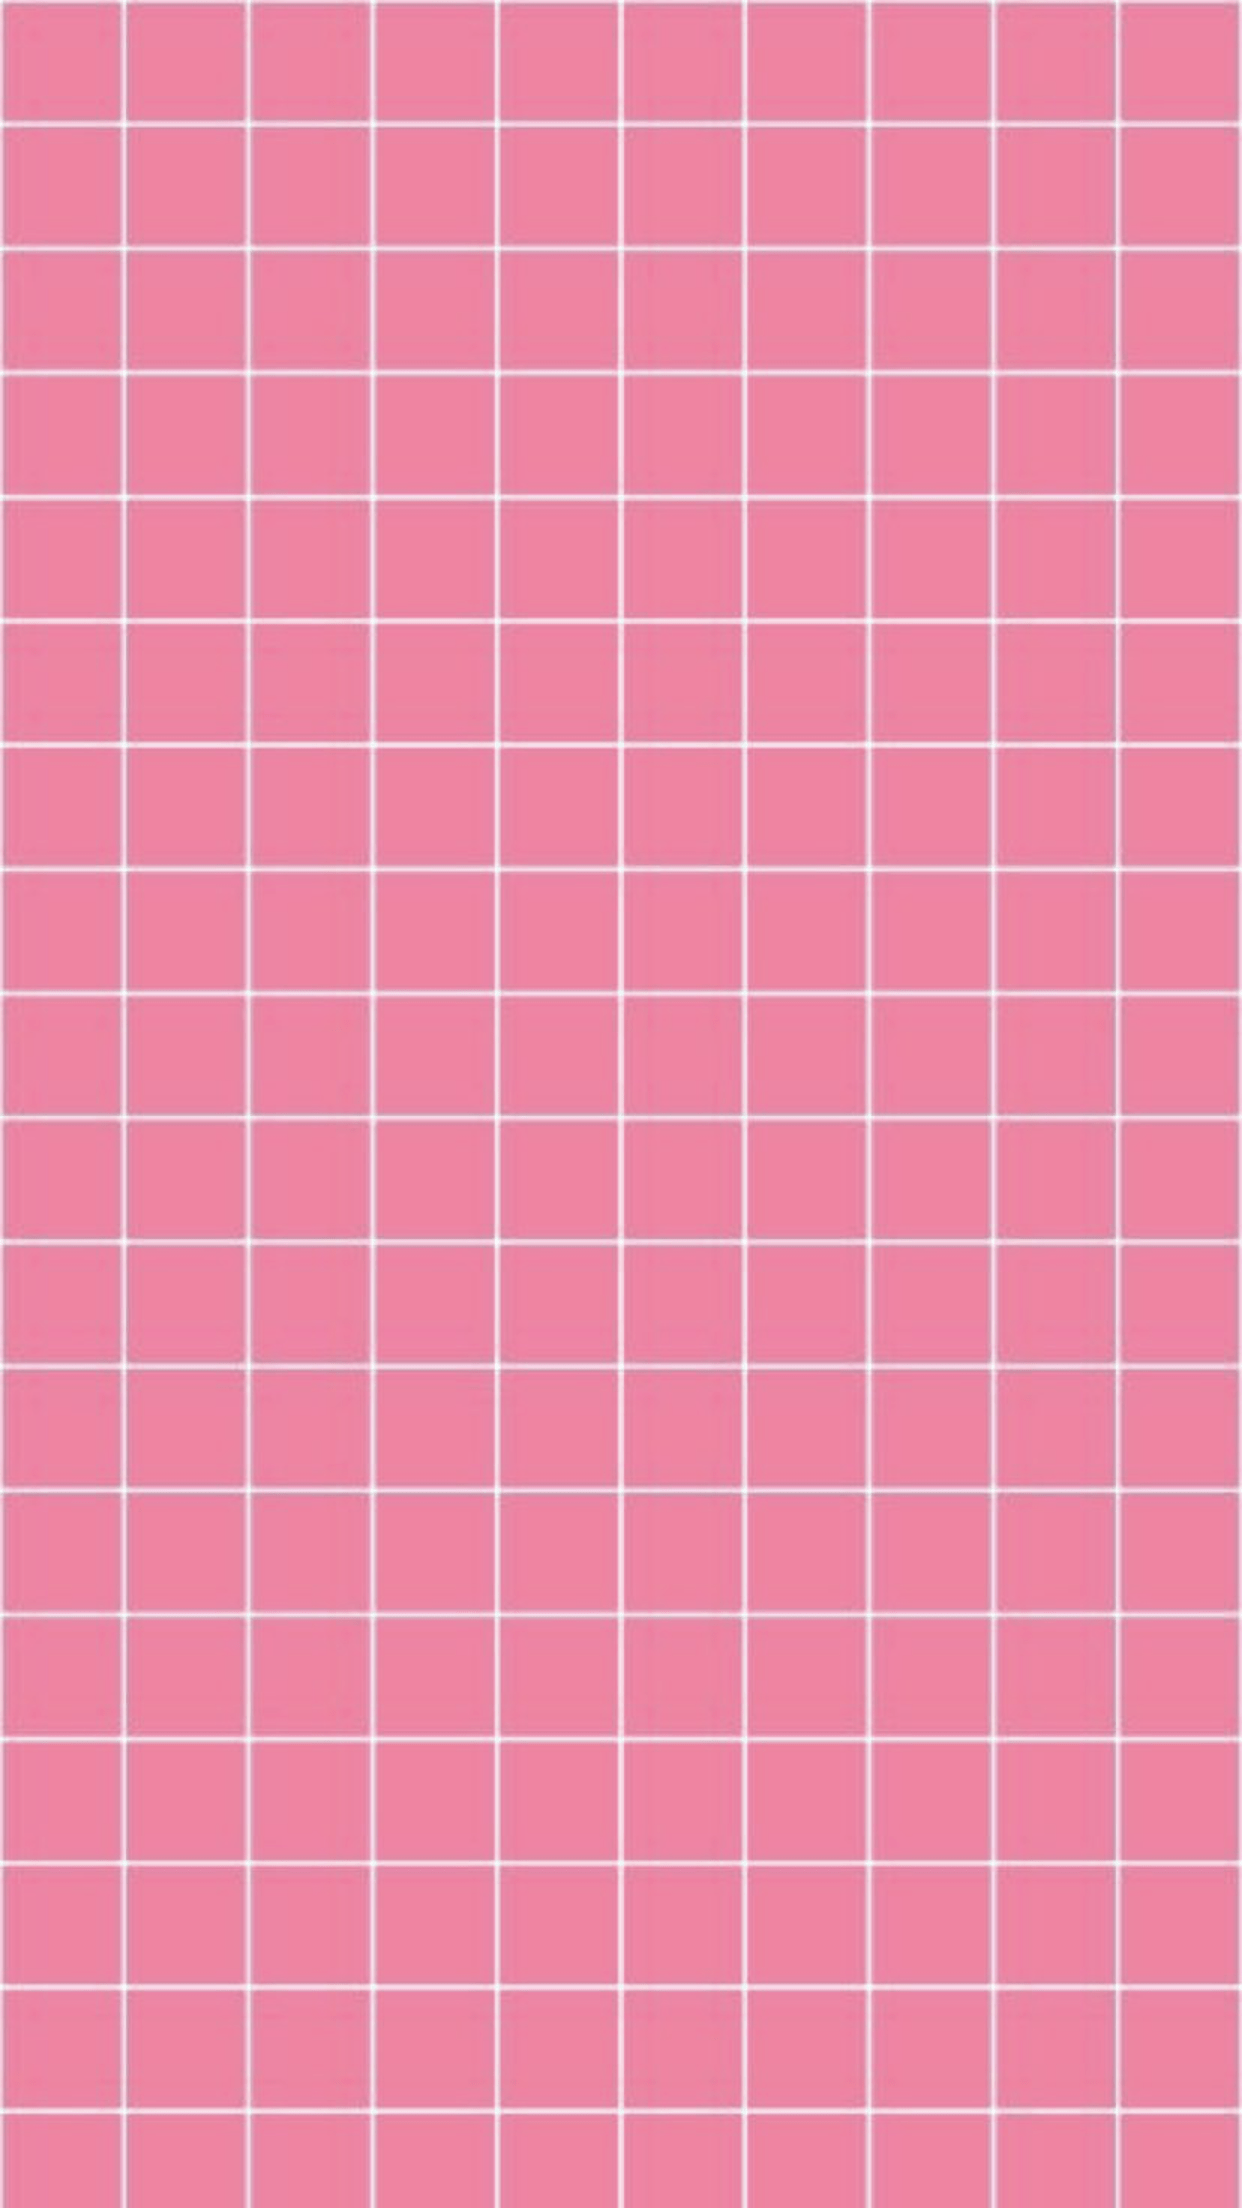 A pink grid background - Grid